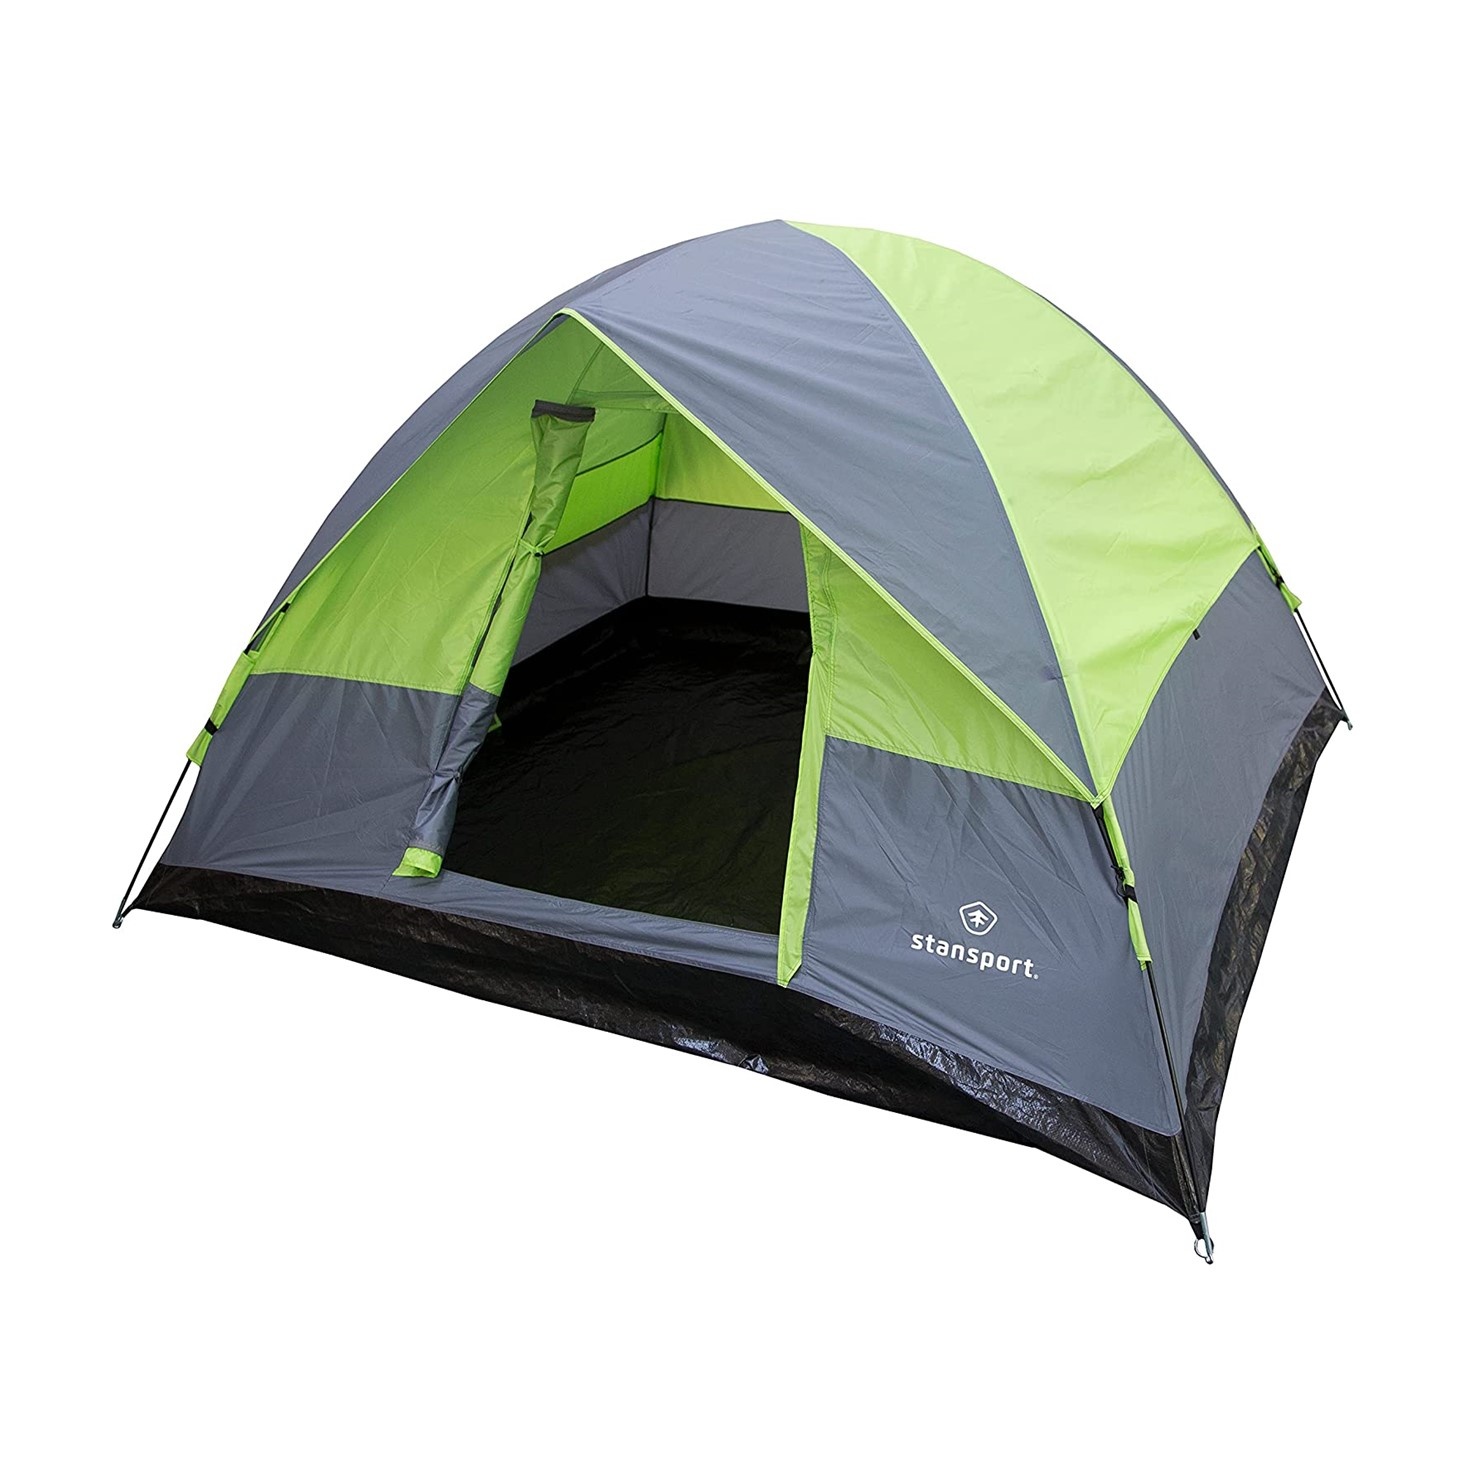 Stansport Cedar Creek Dome 4-Person Tent